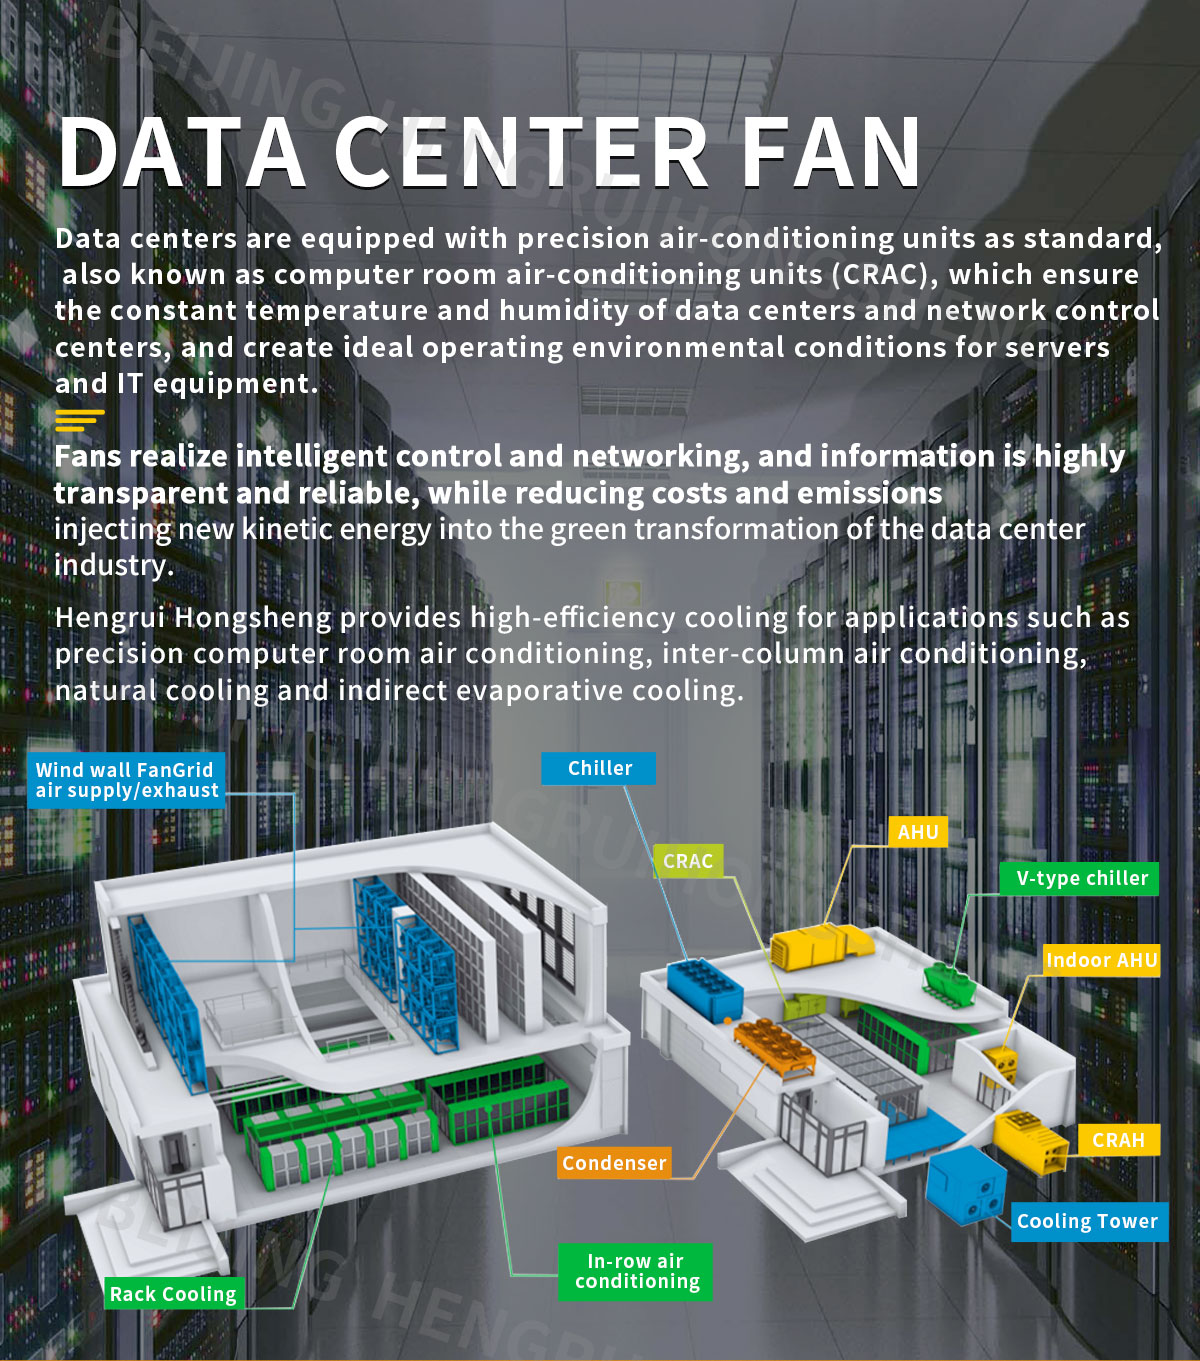 Data center fan